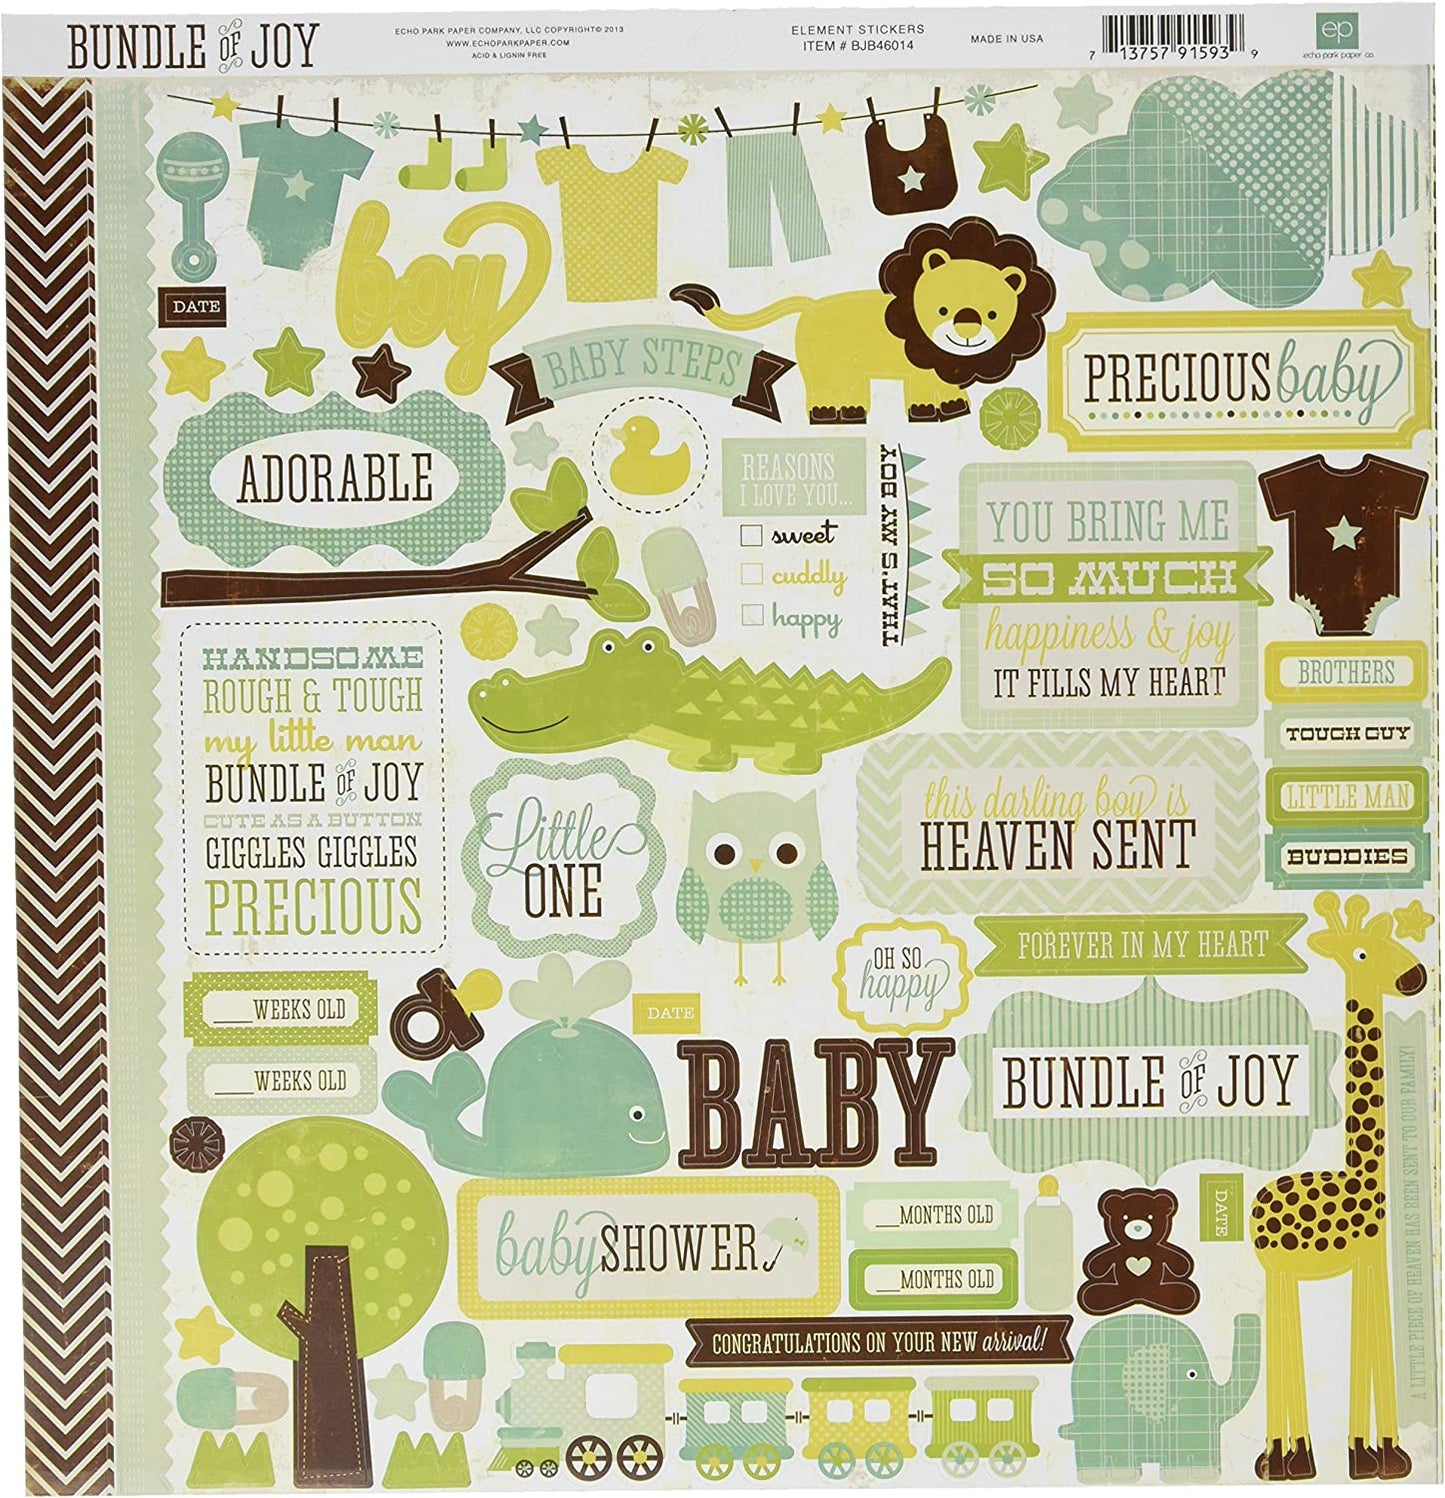 Bundle of Joy Baby boy Element Stickers by Echo Park